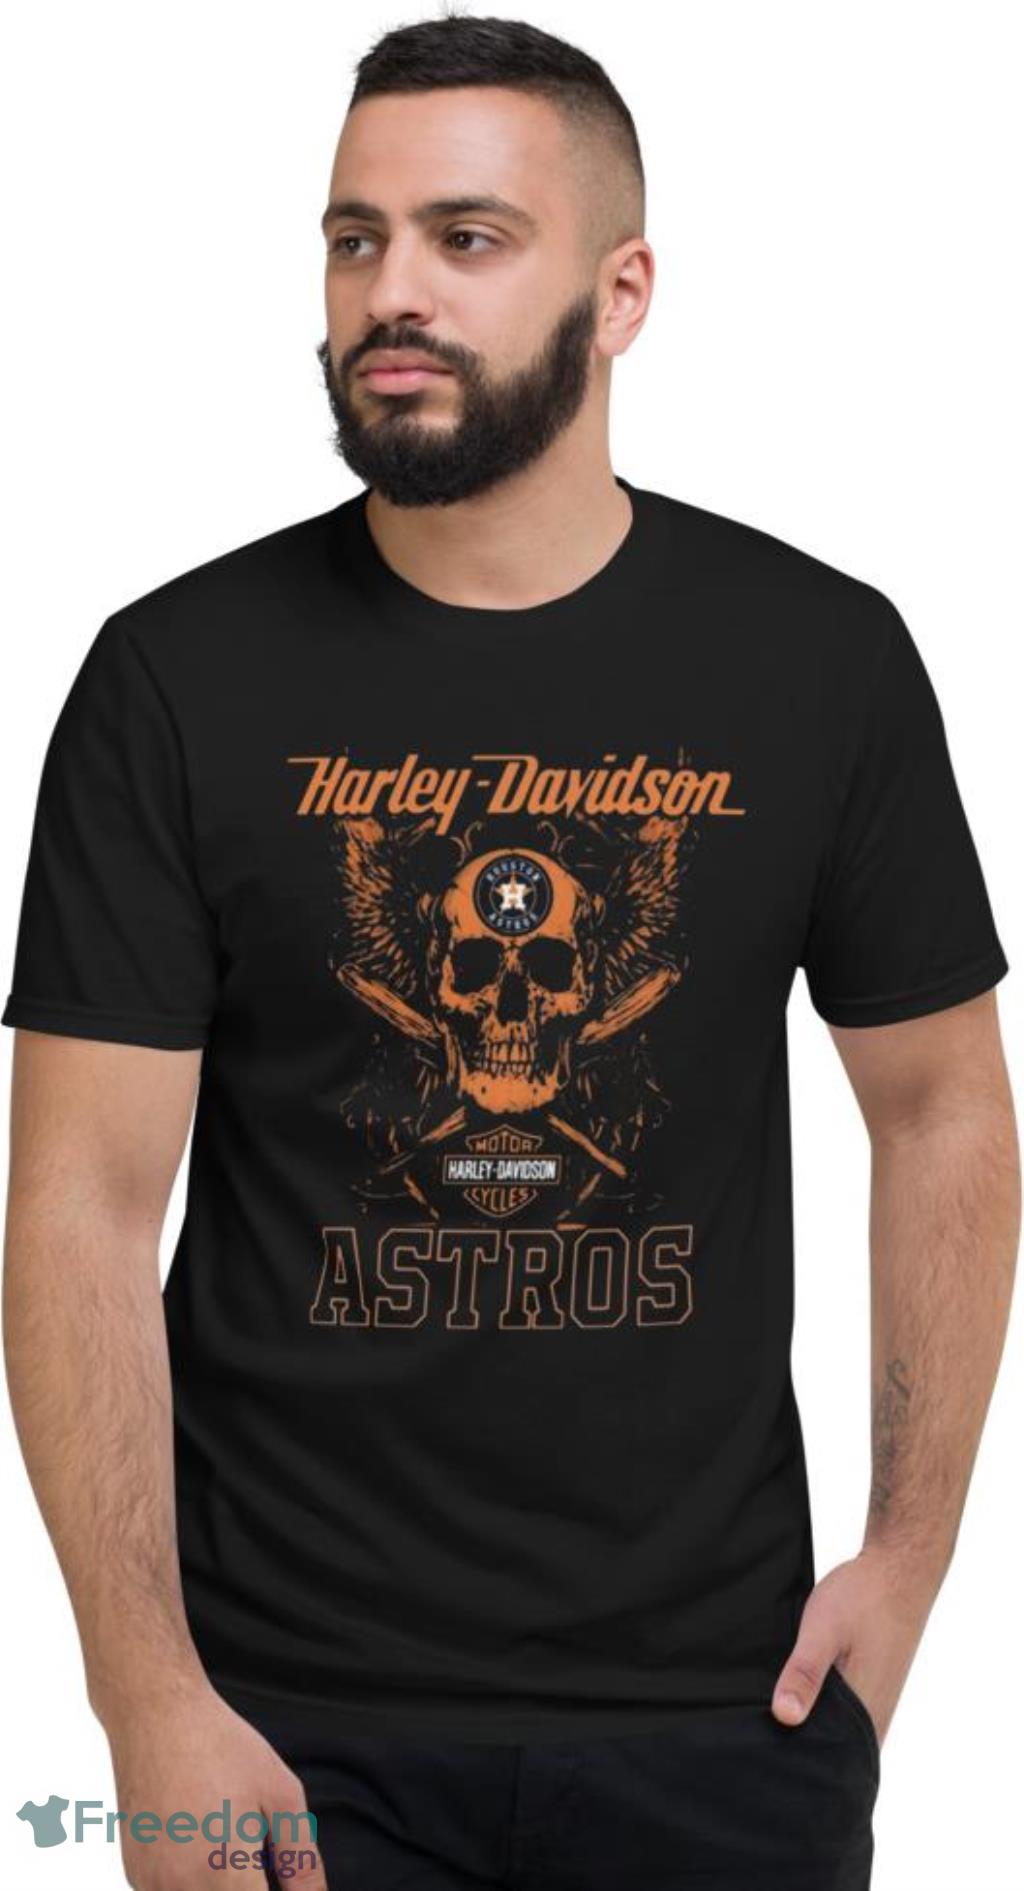 Baseball Shirt Motor Harley- Houston - Baseball Shirt Motor Harley-Davidson Houston Astros11